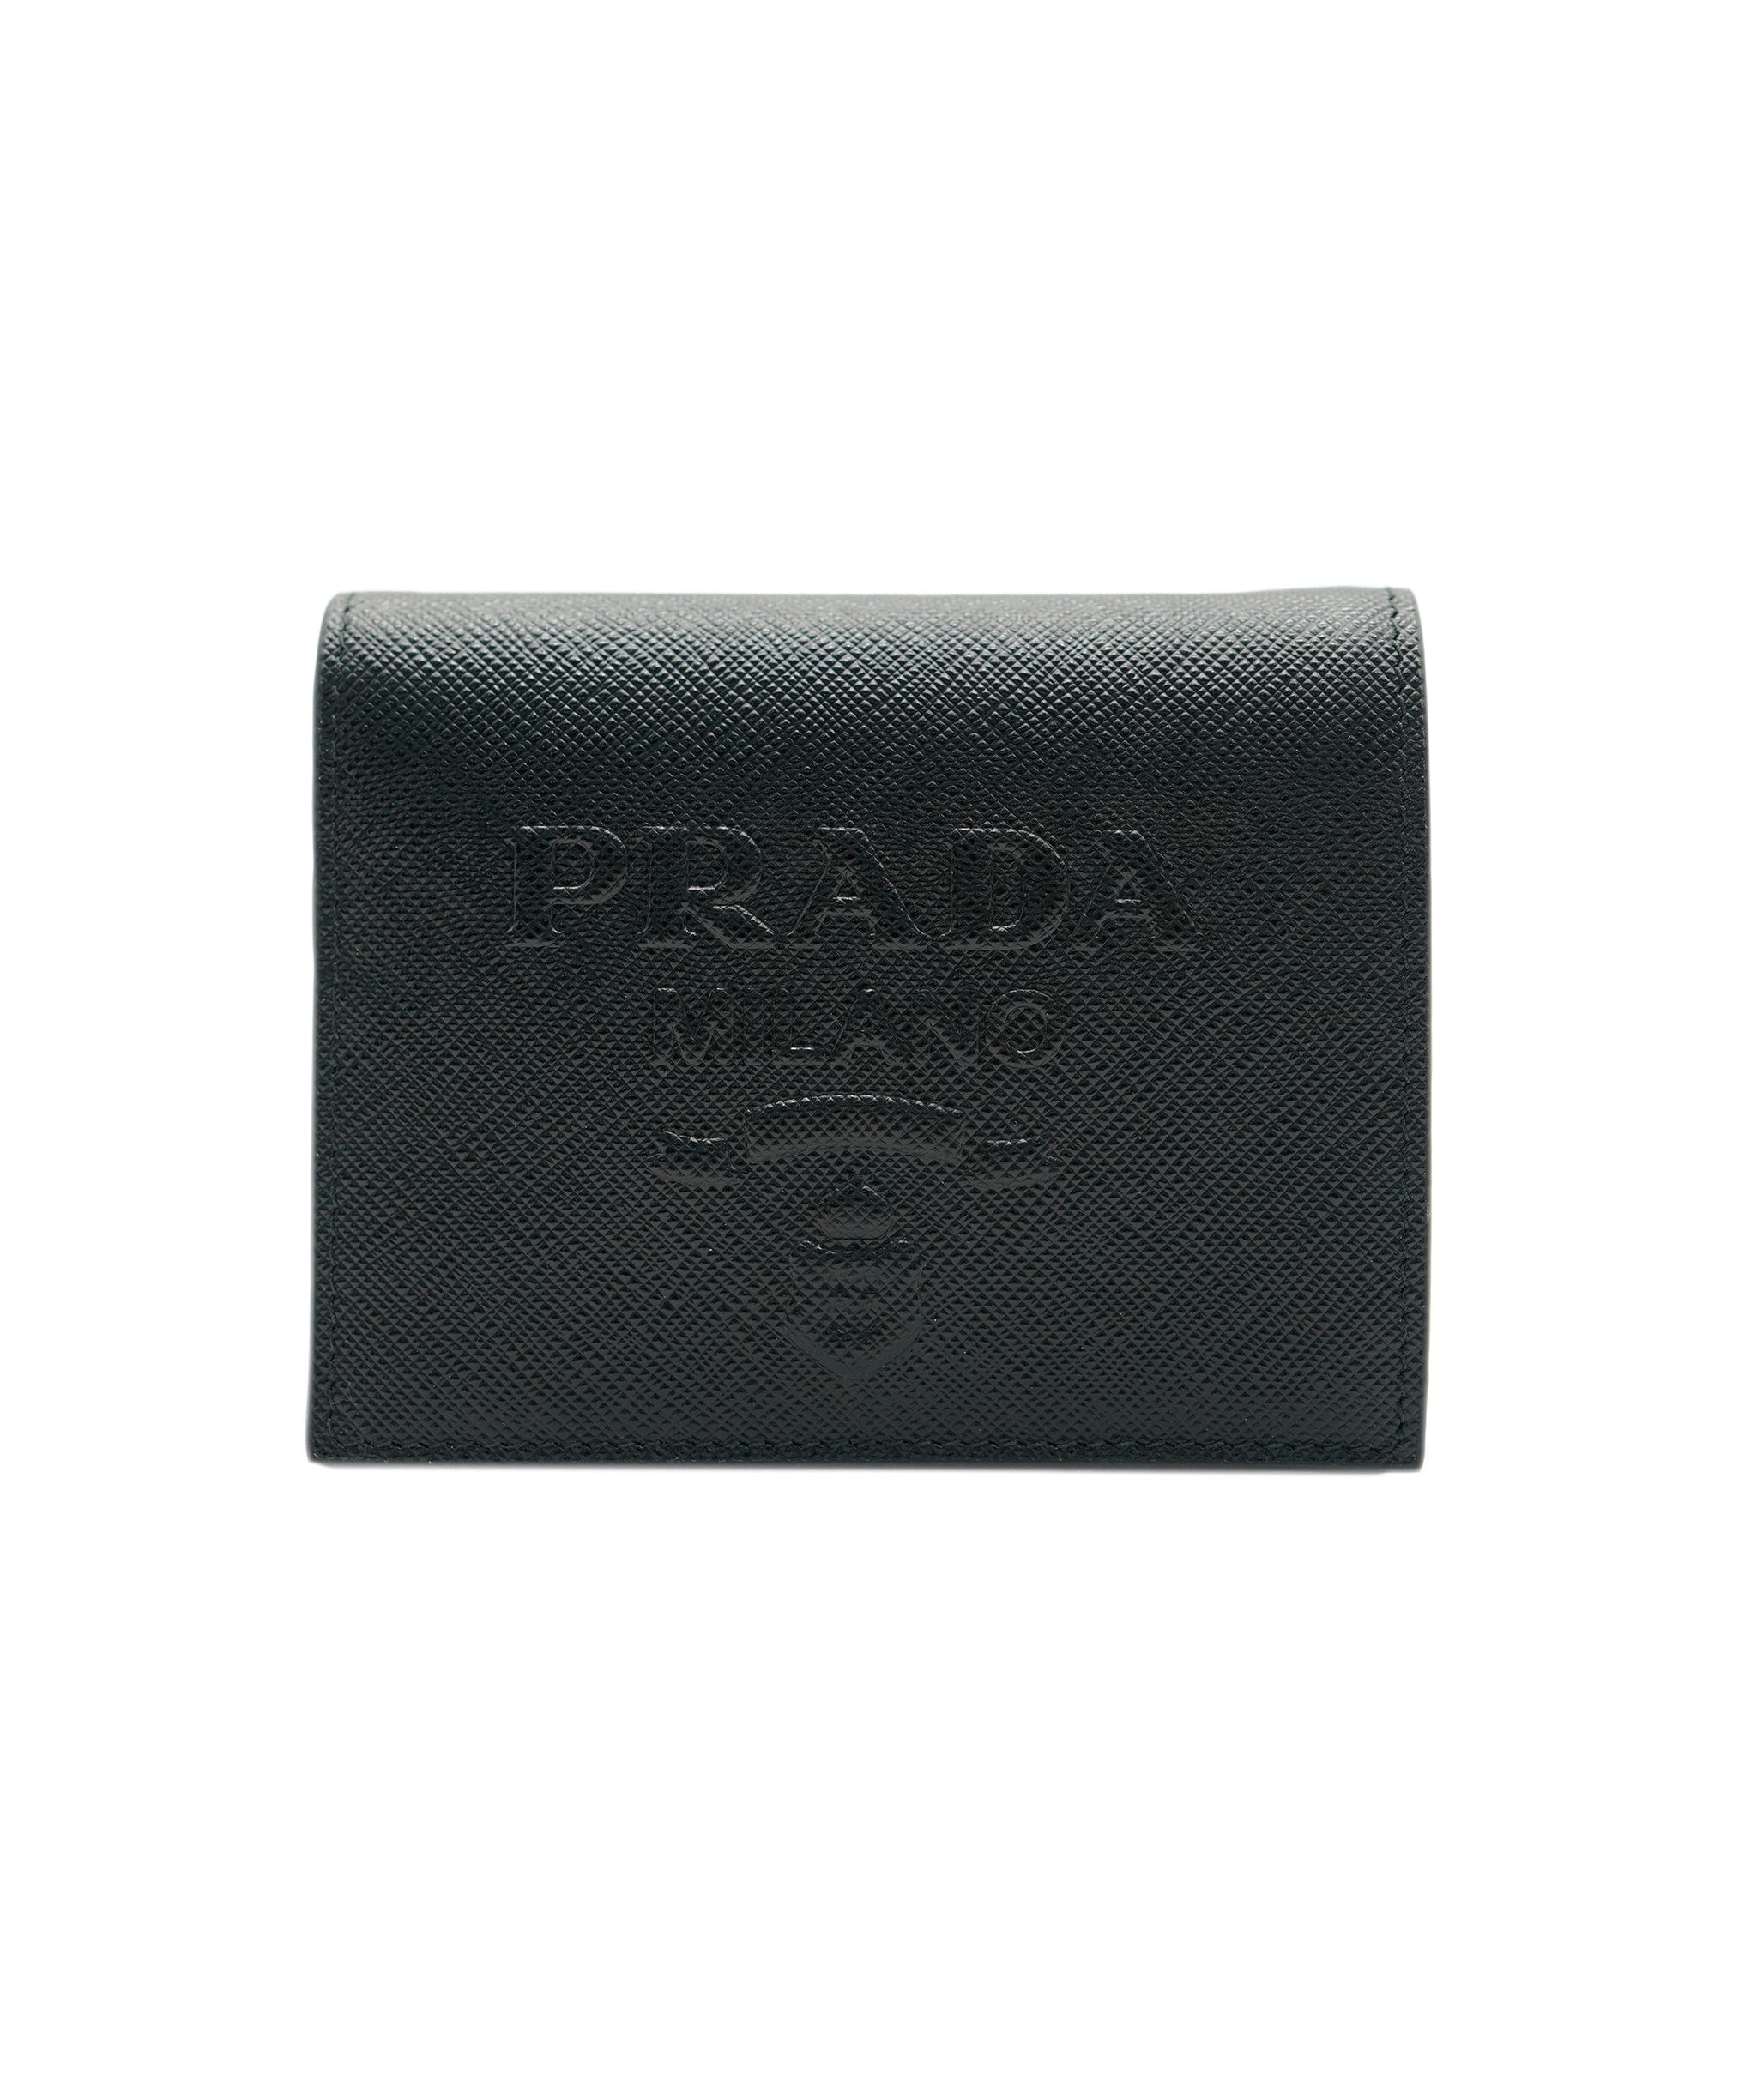 Prada Prada Black Square Wallet AJL0131